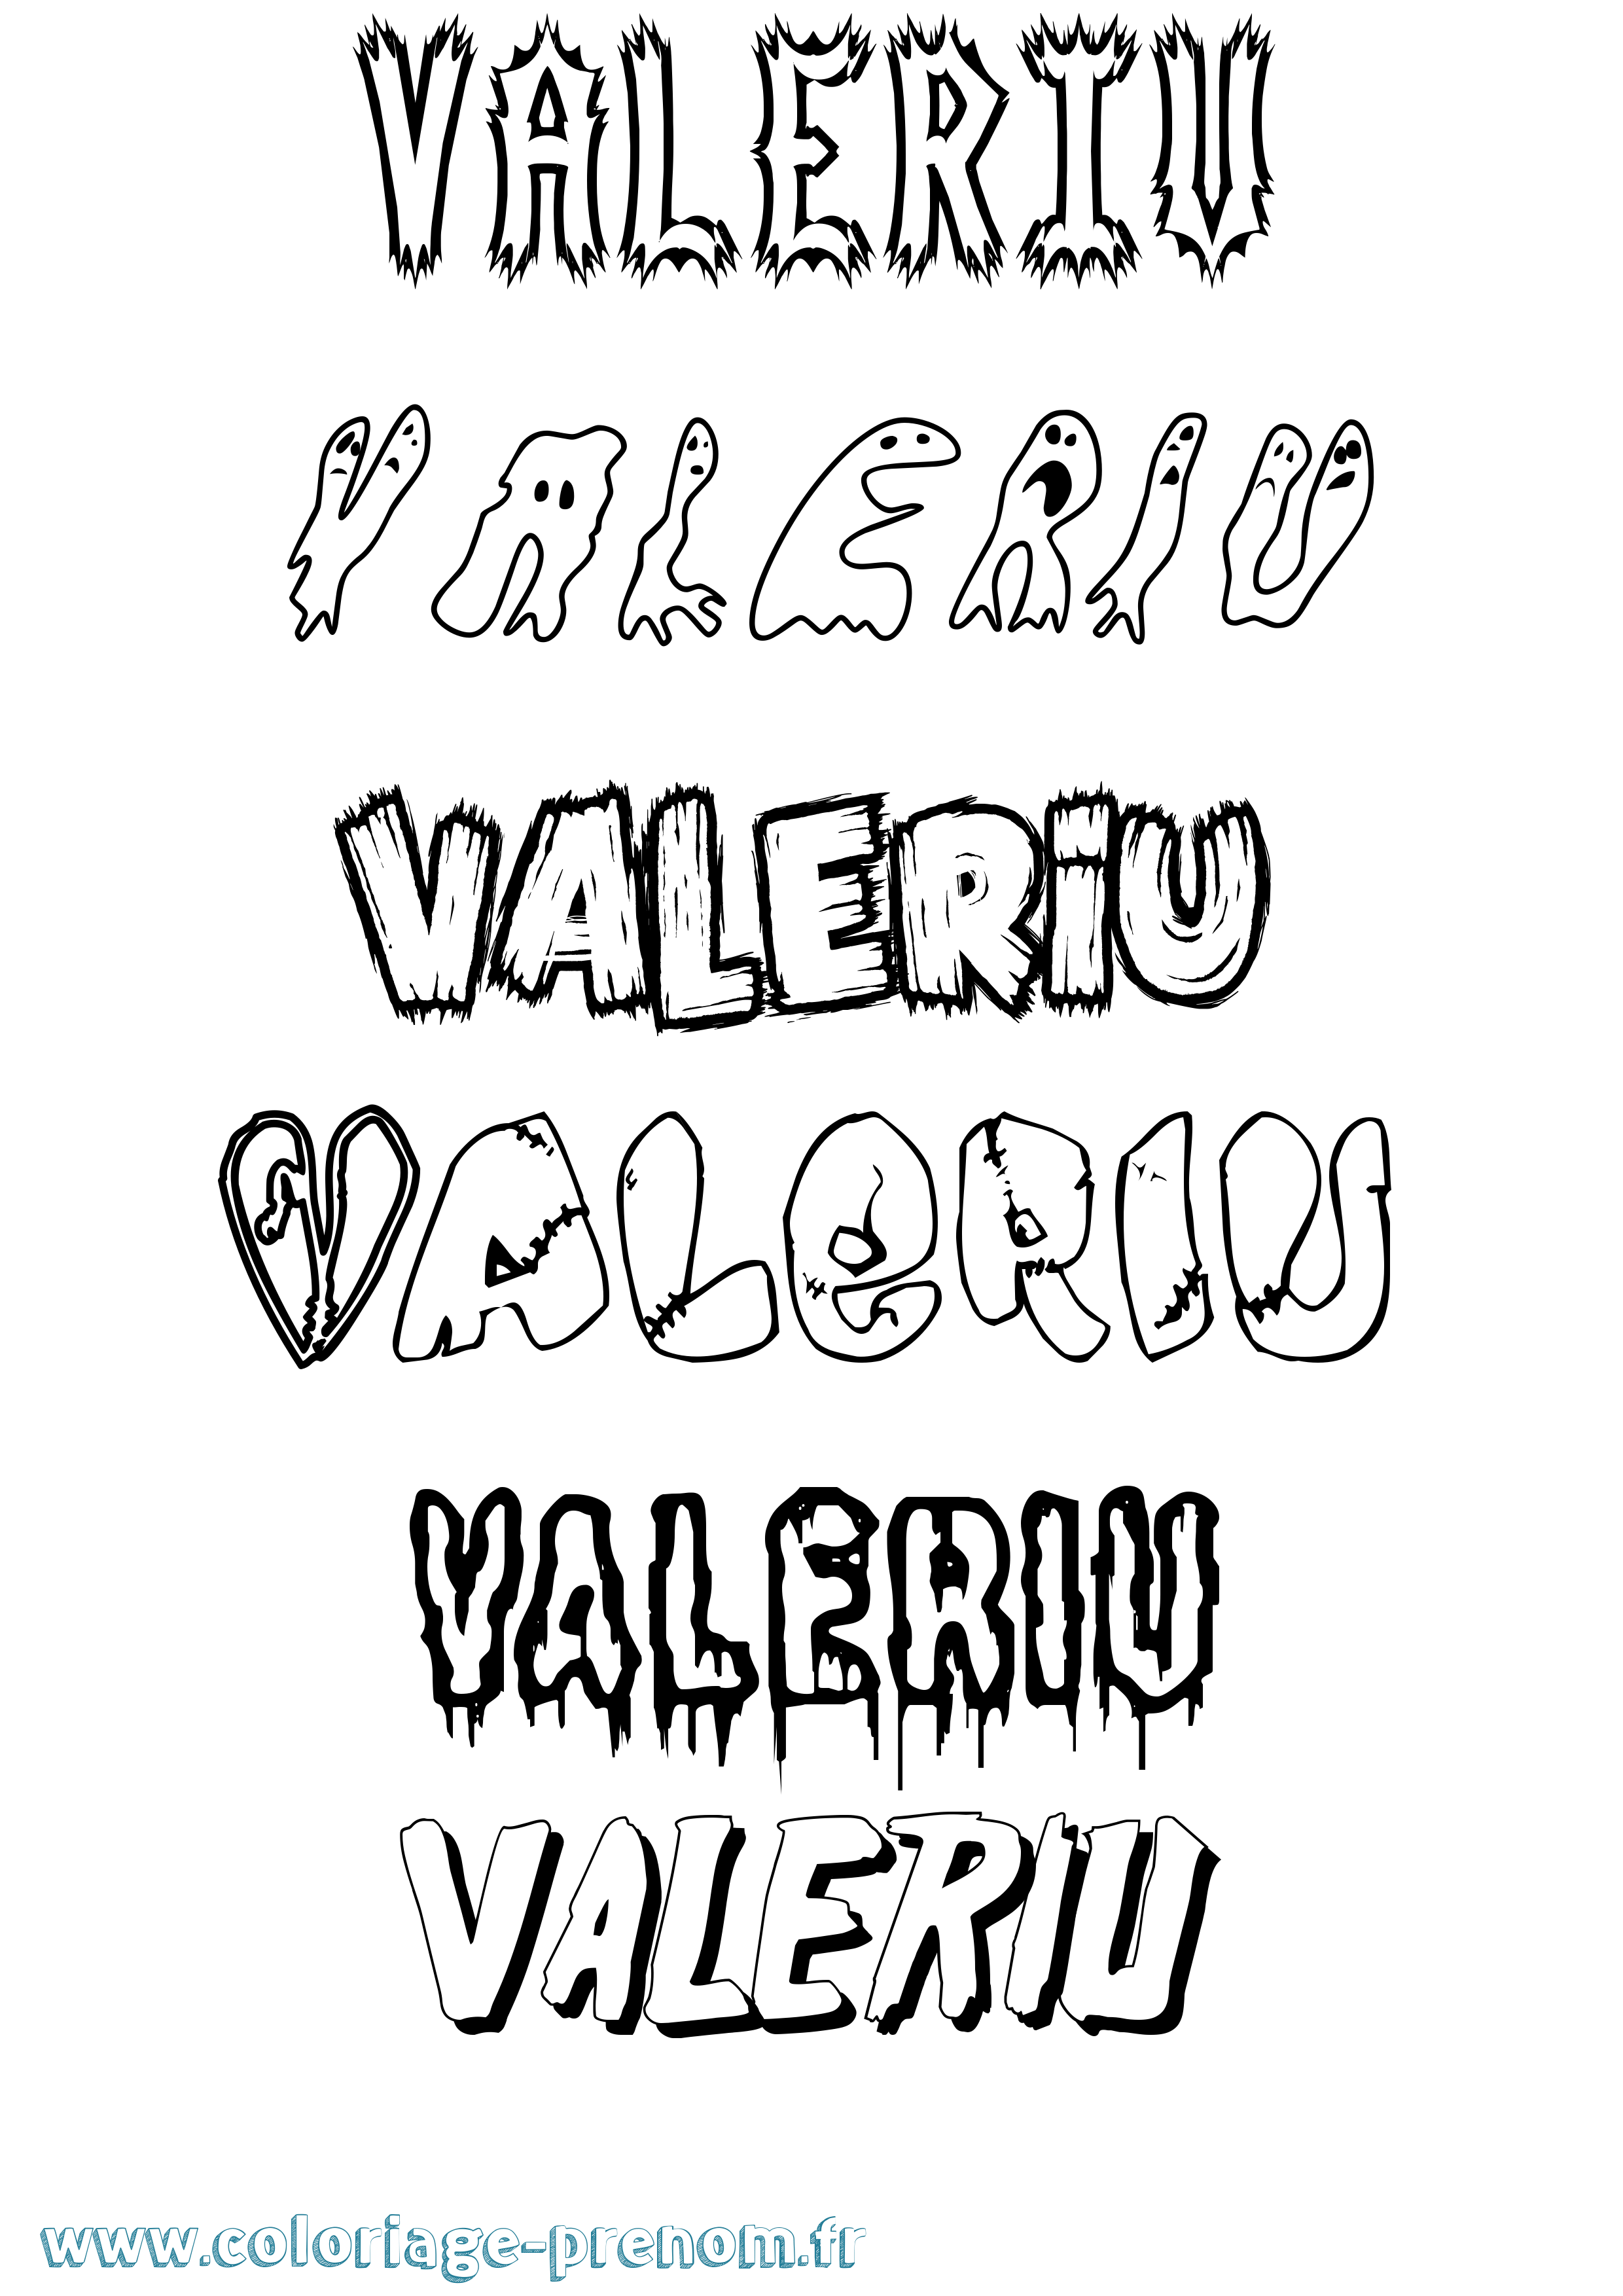 Coloriage prénom Valeriu Frisson